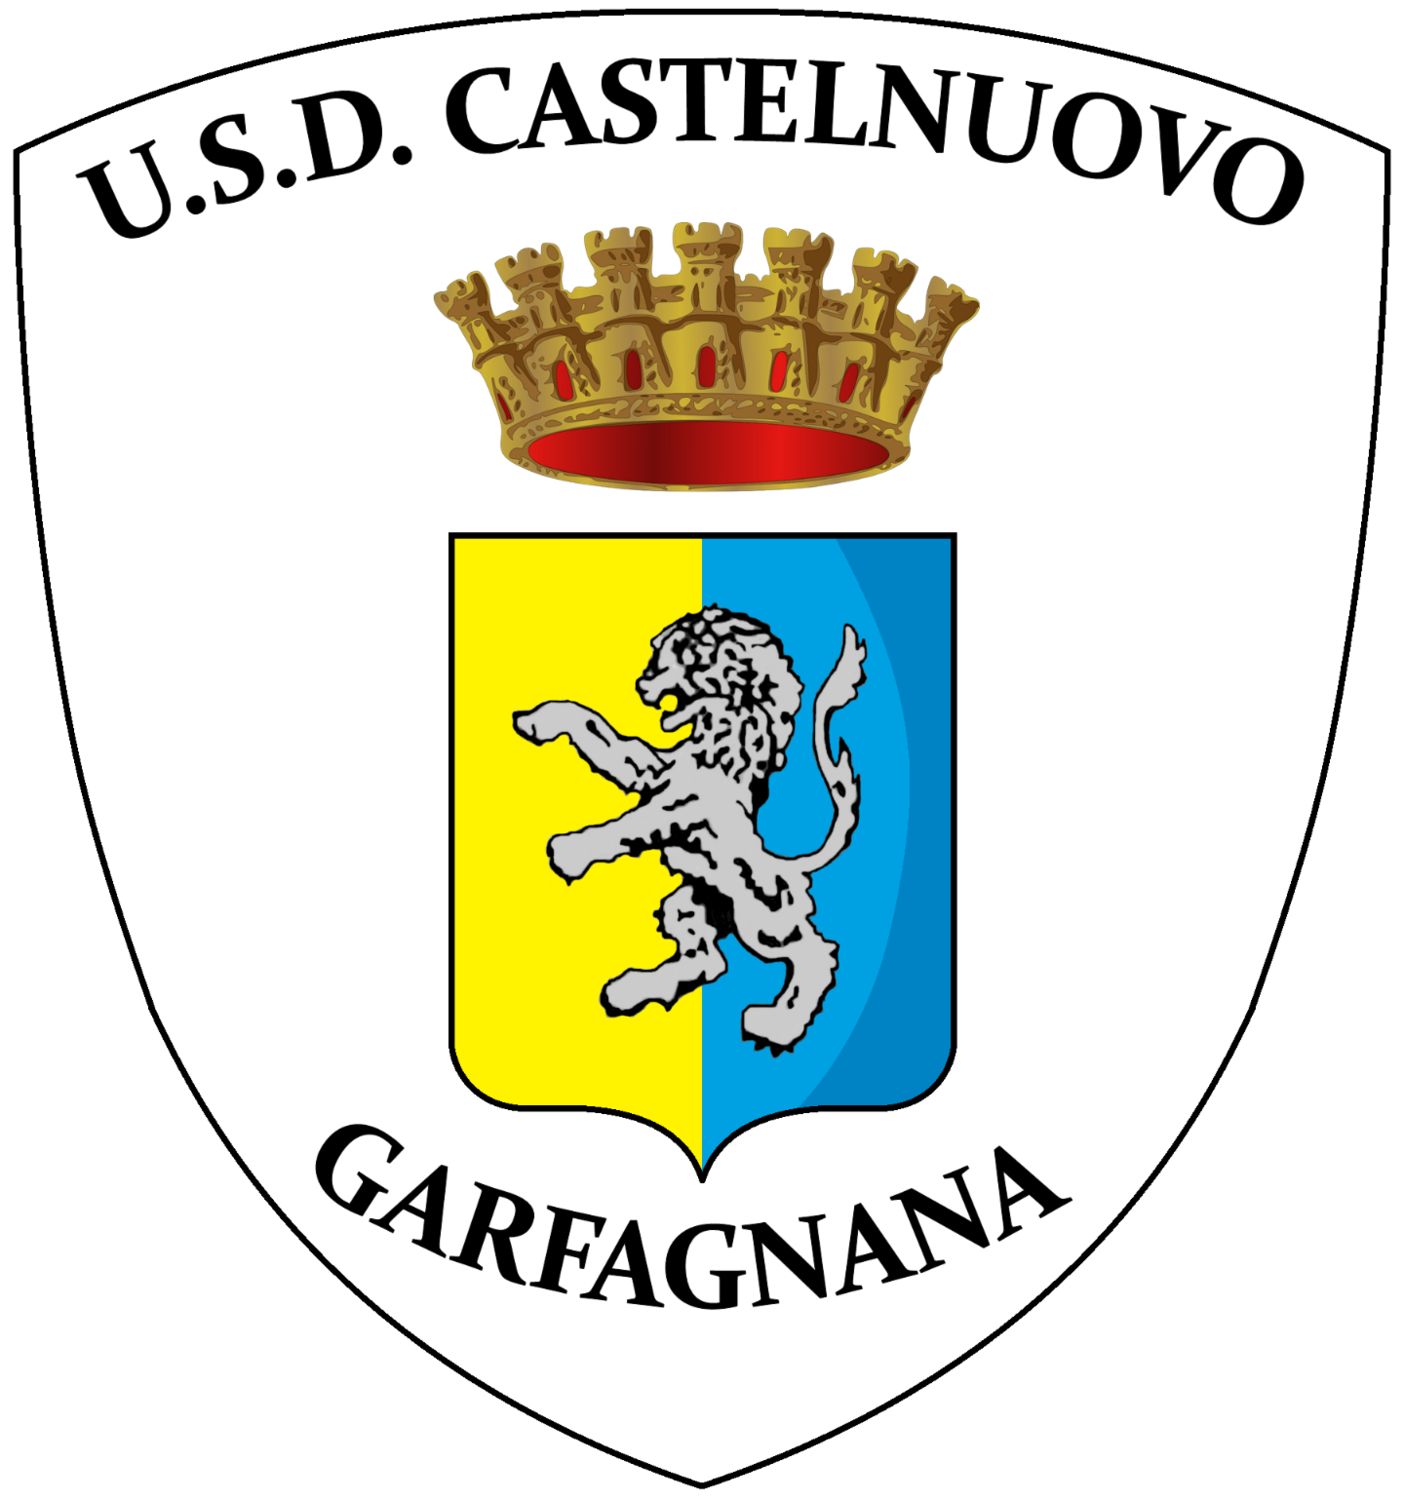 Castelnuovo G.